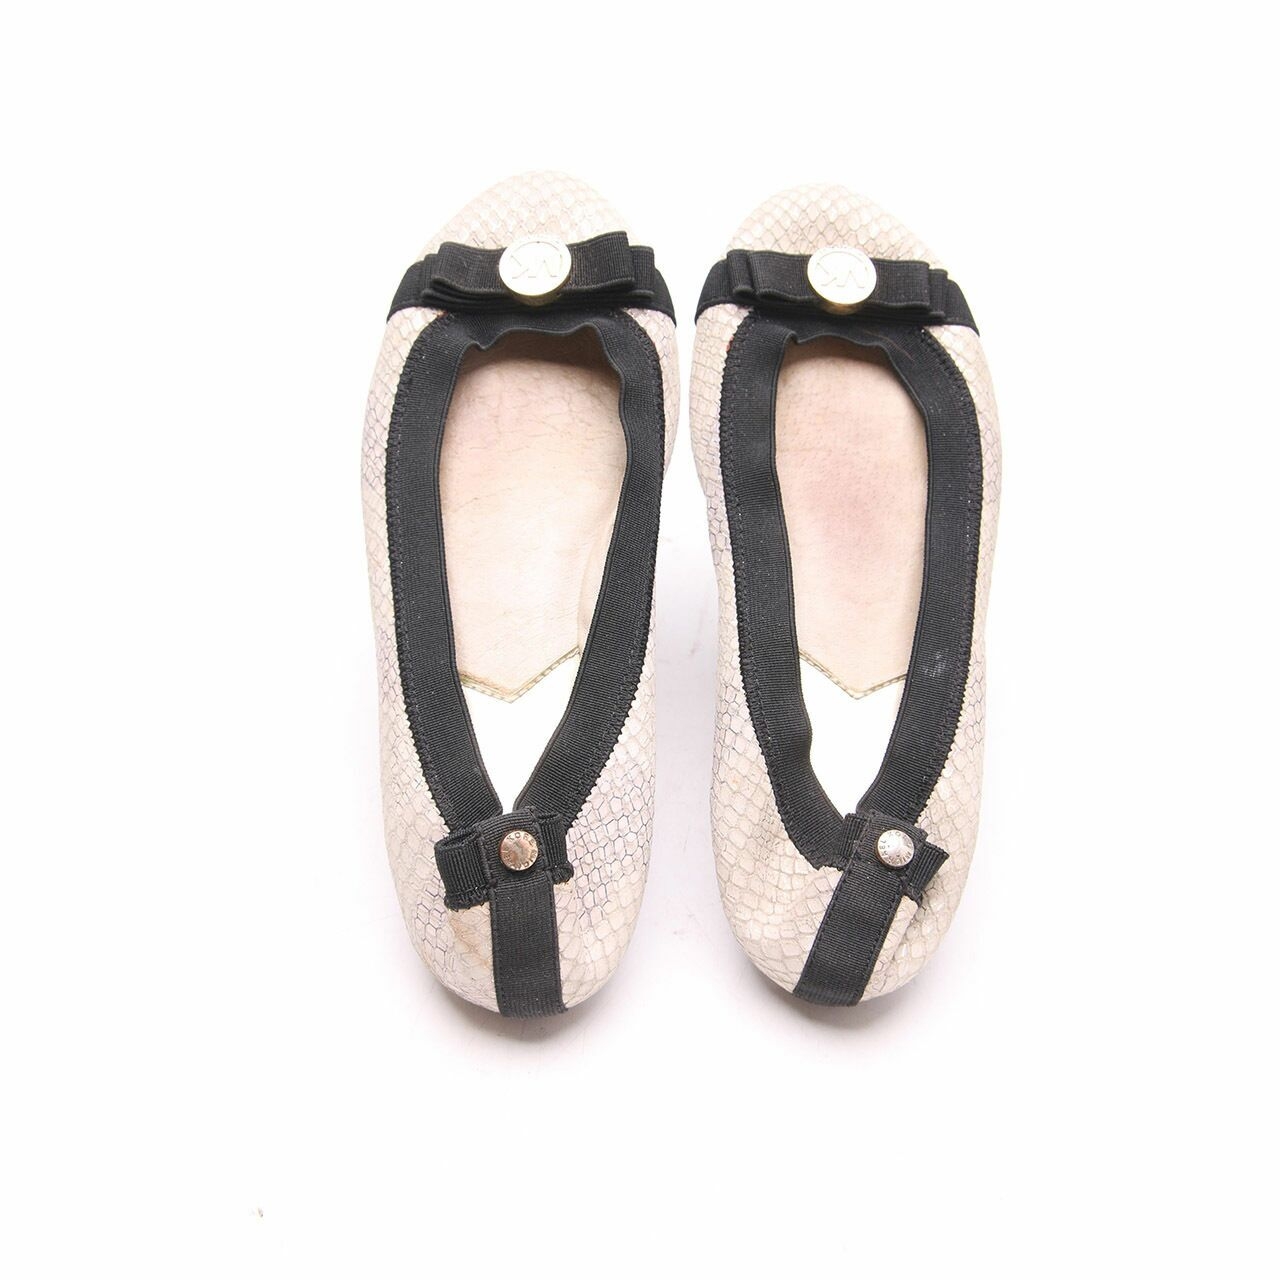 Michael Kors Grey Black Ballet Flats Shoes